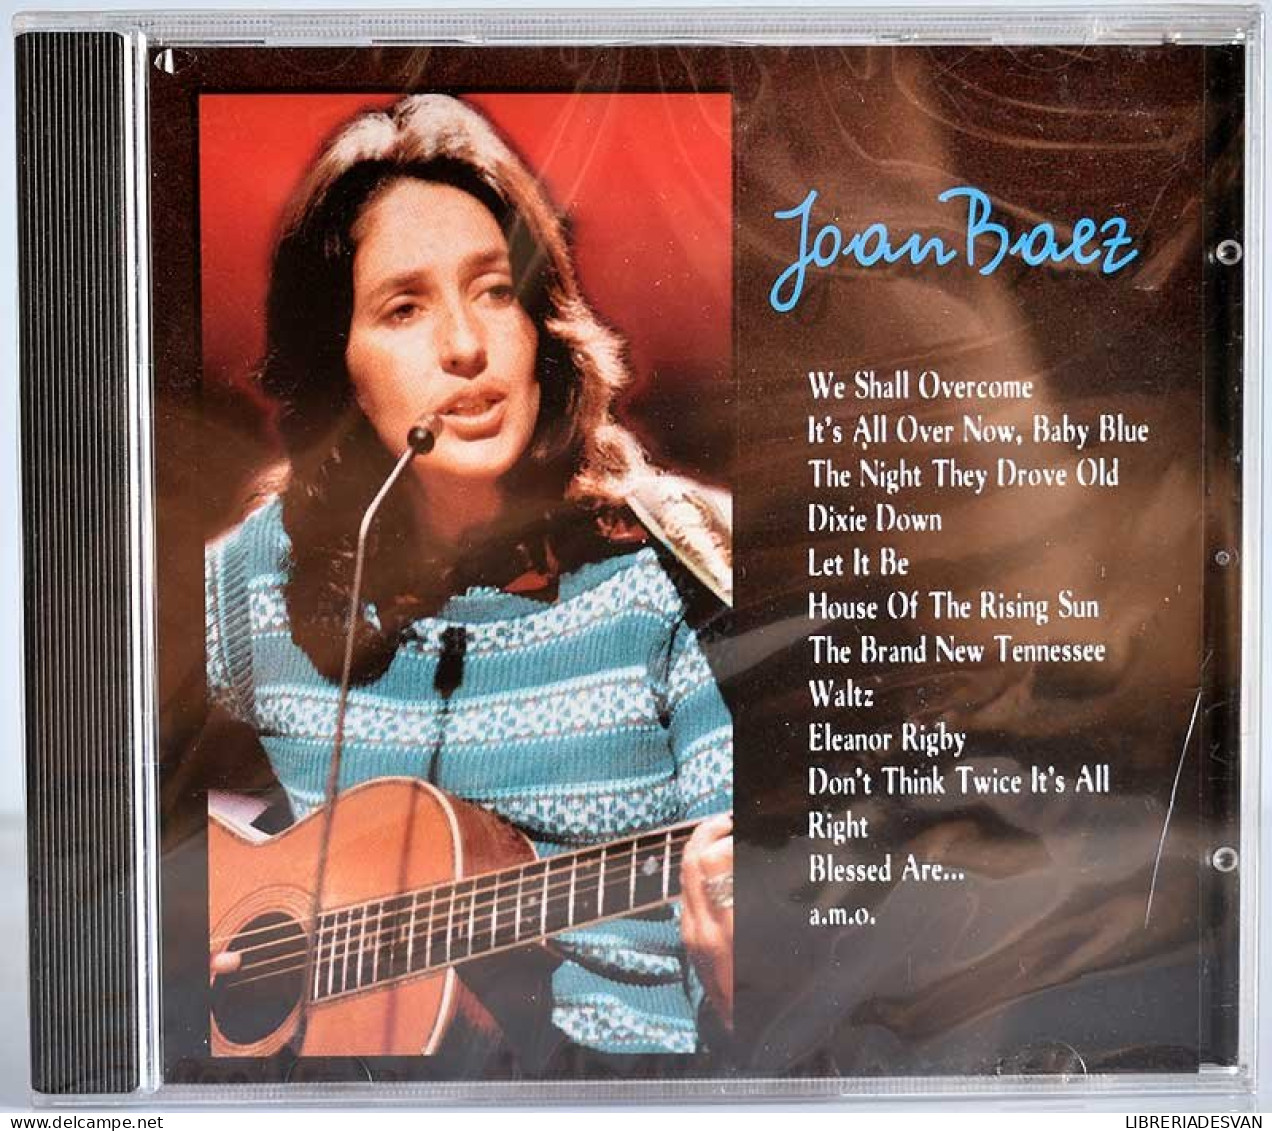 Joan Baez - Joan Baez. CD - Country Et Folk